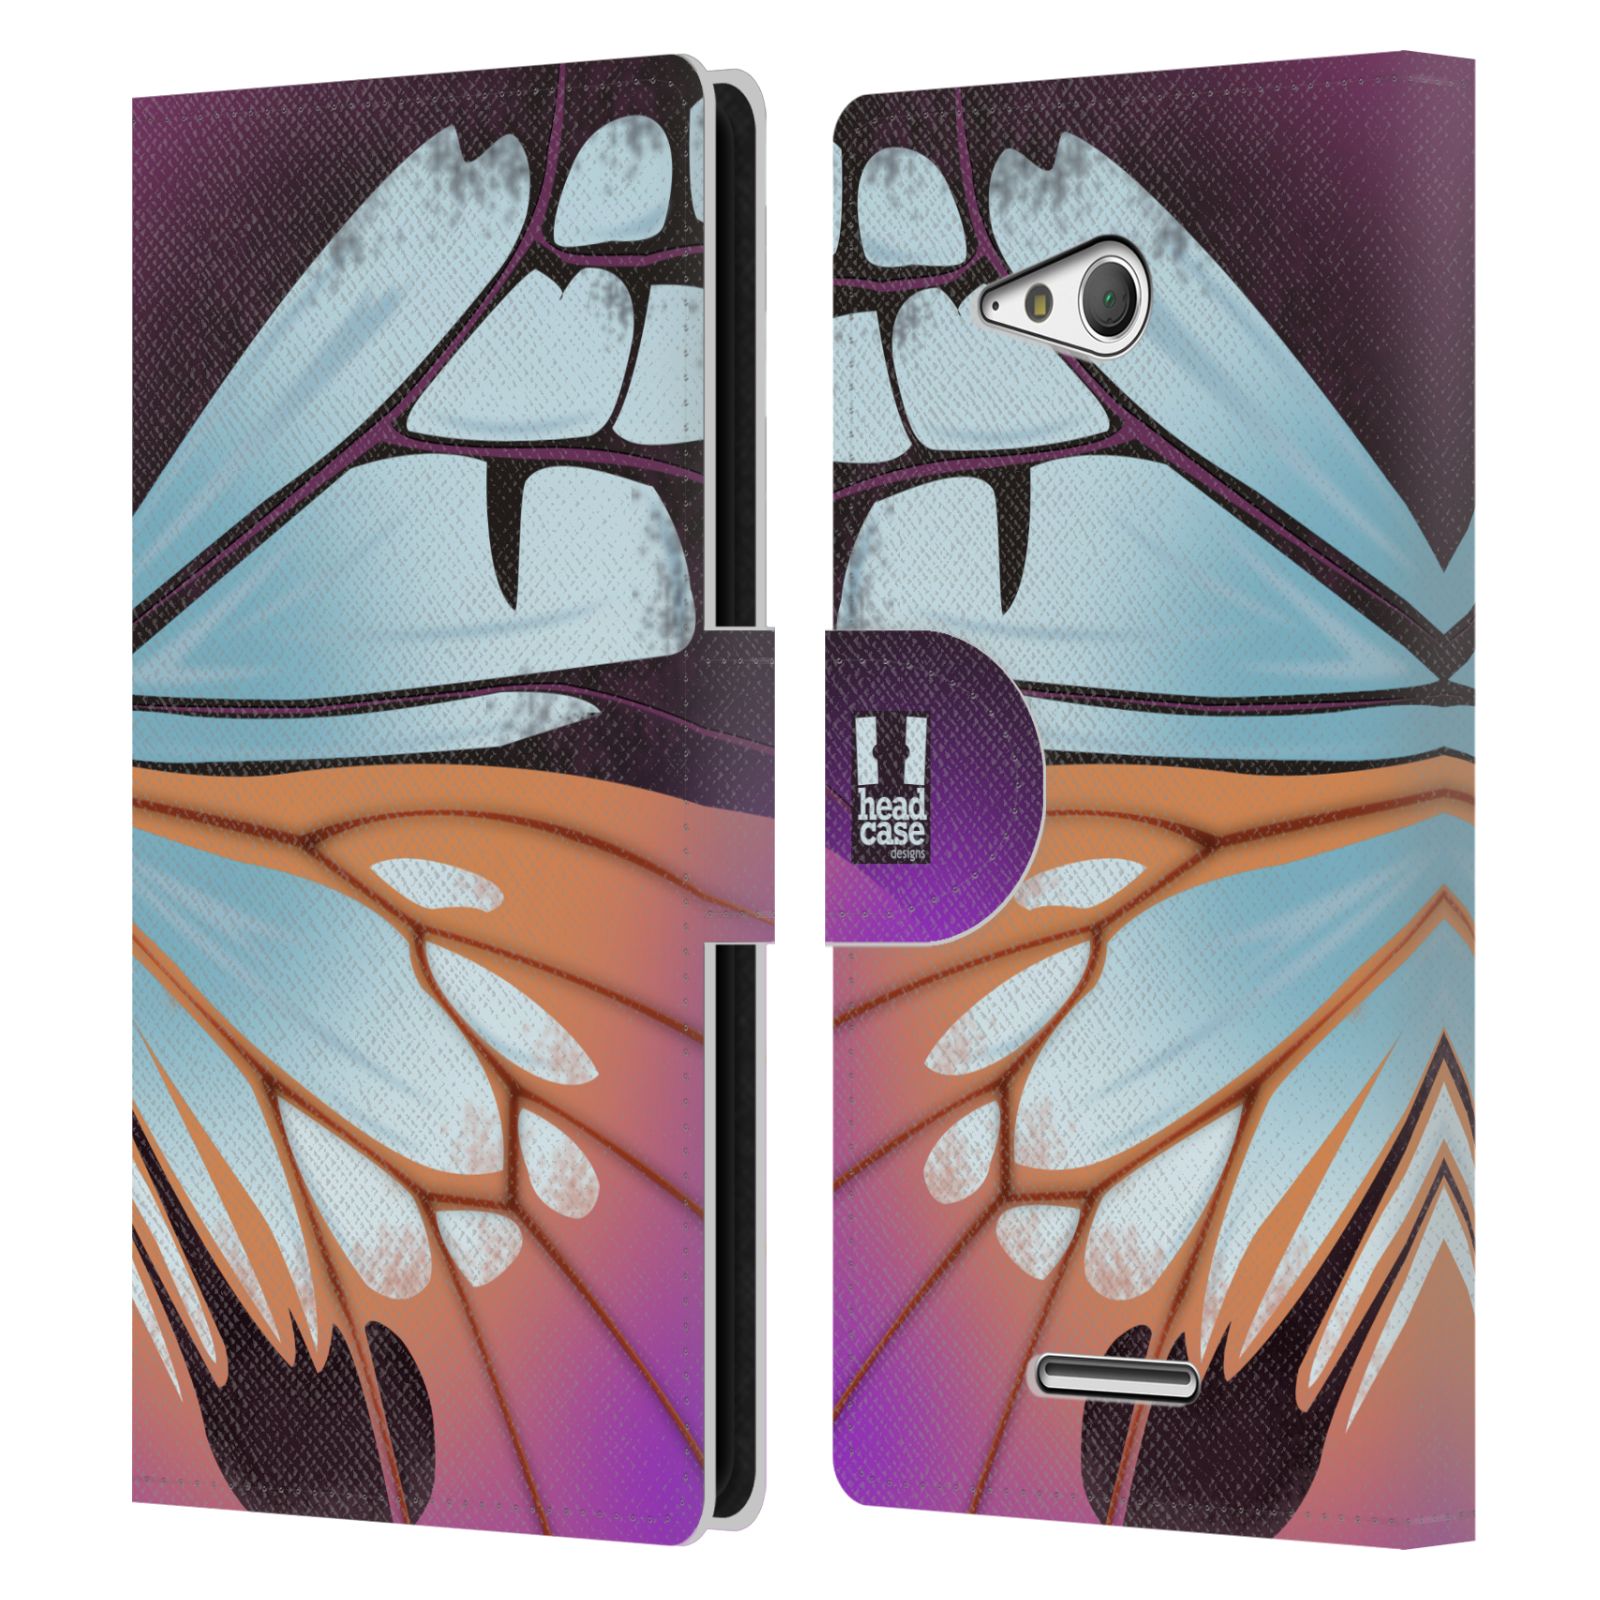 HEAD CASE Flipové pouzdro pro mobil SONY XPERIA E4g motýl a křídla kreslený vzor fialová a modrá